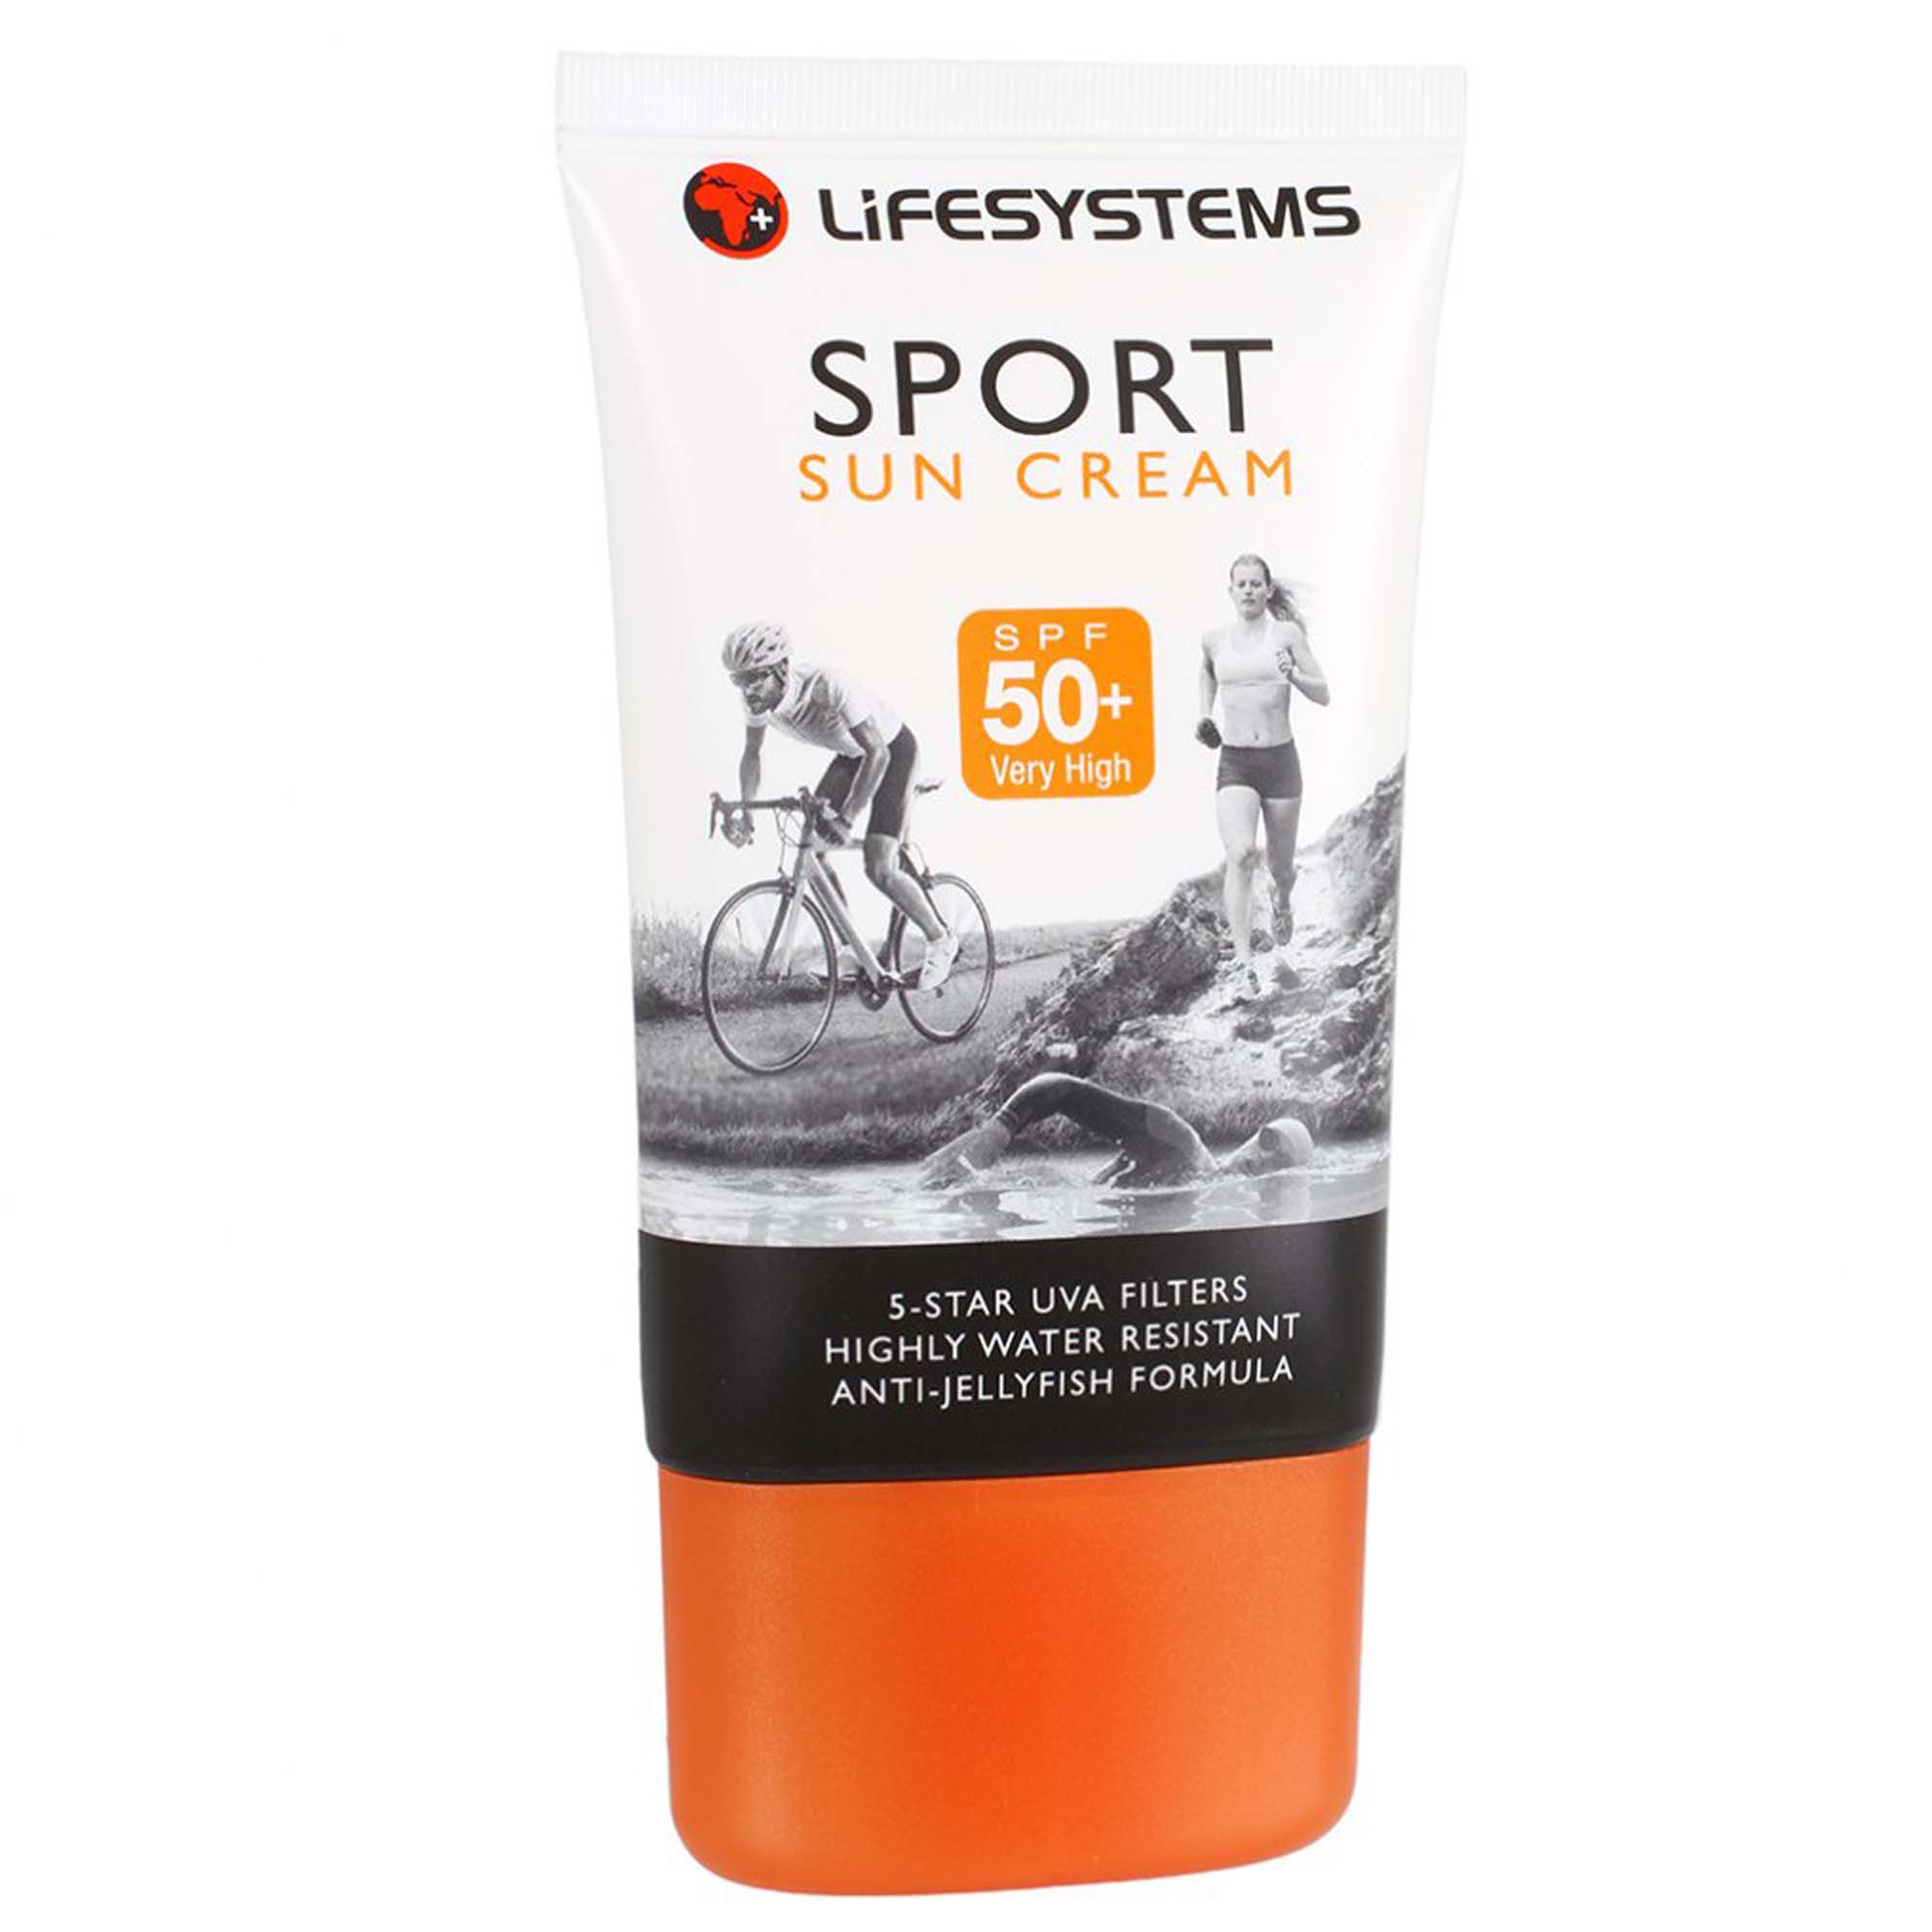 Lifesystems Sport SPF50+ Water Resistant Sun Cream